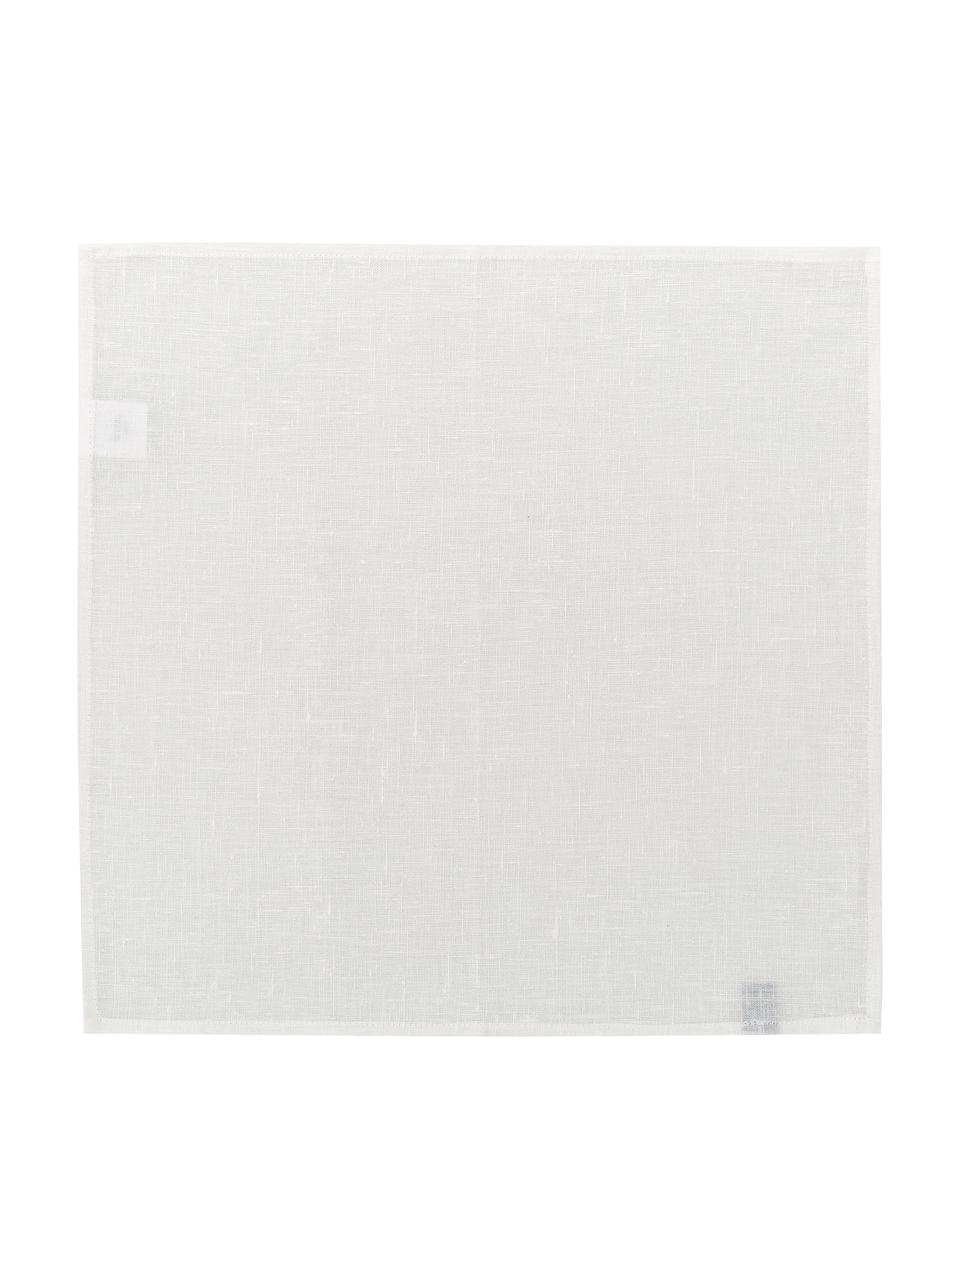 Linnen servetten Heddie in wit, 2 stuks, 100% linnen, Wit, 45 x 45 cm